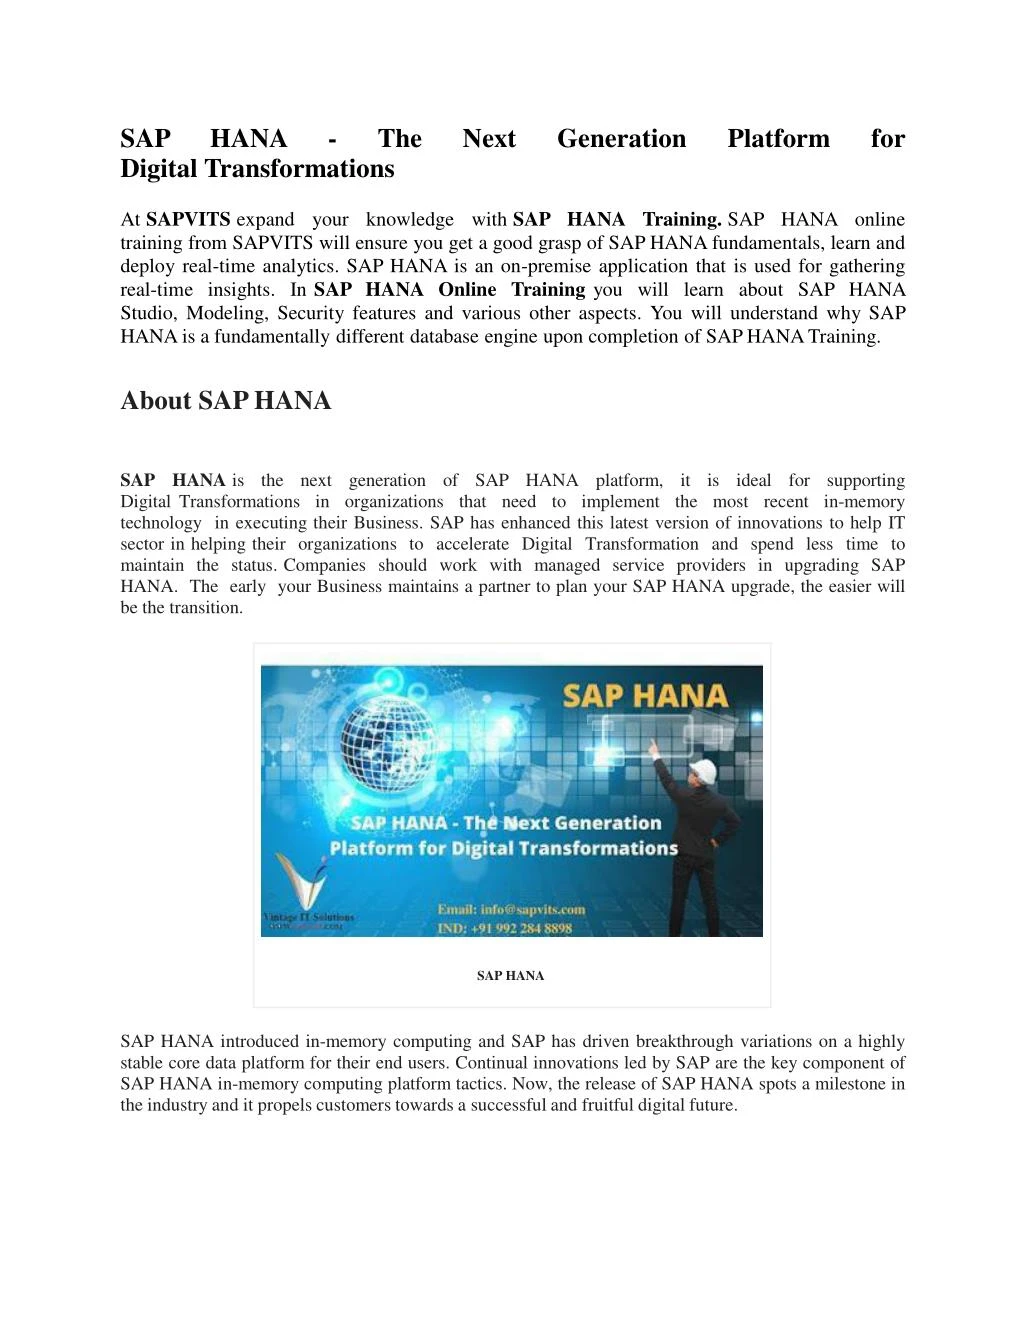 sap hana the next generation platform for digital